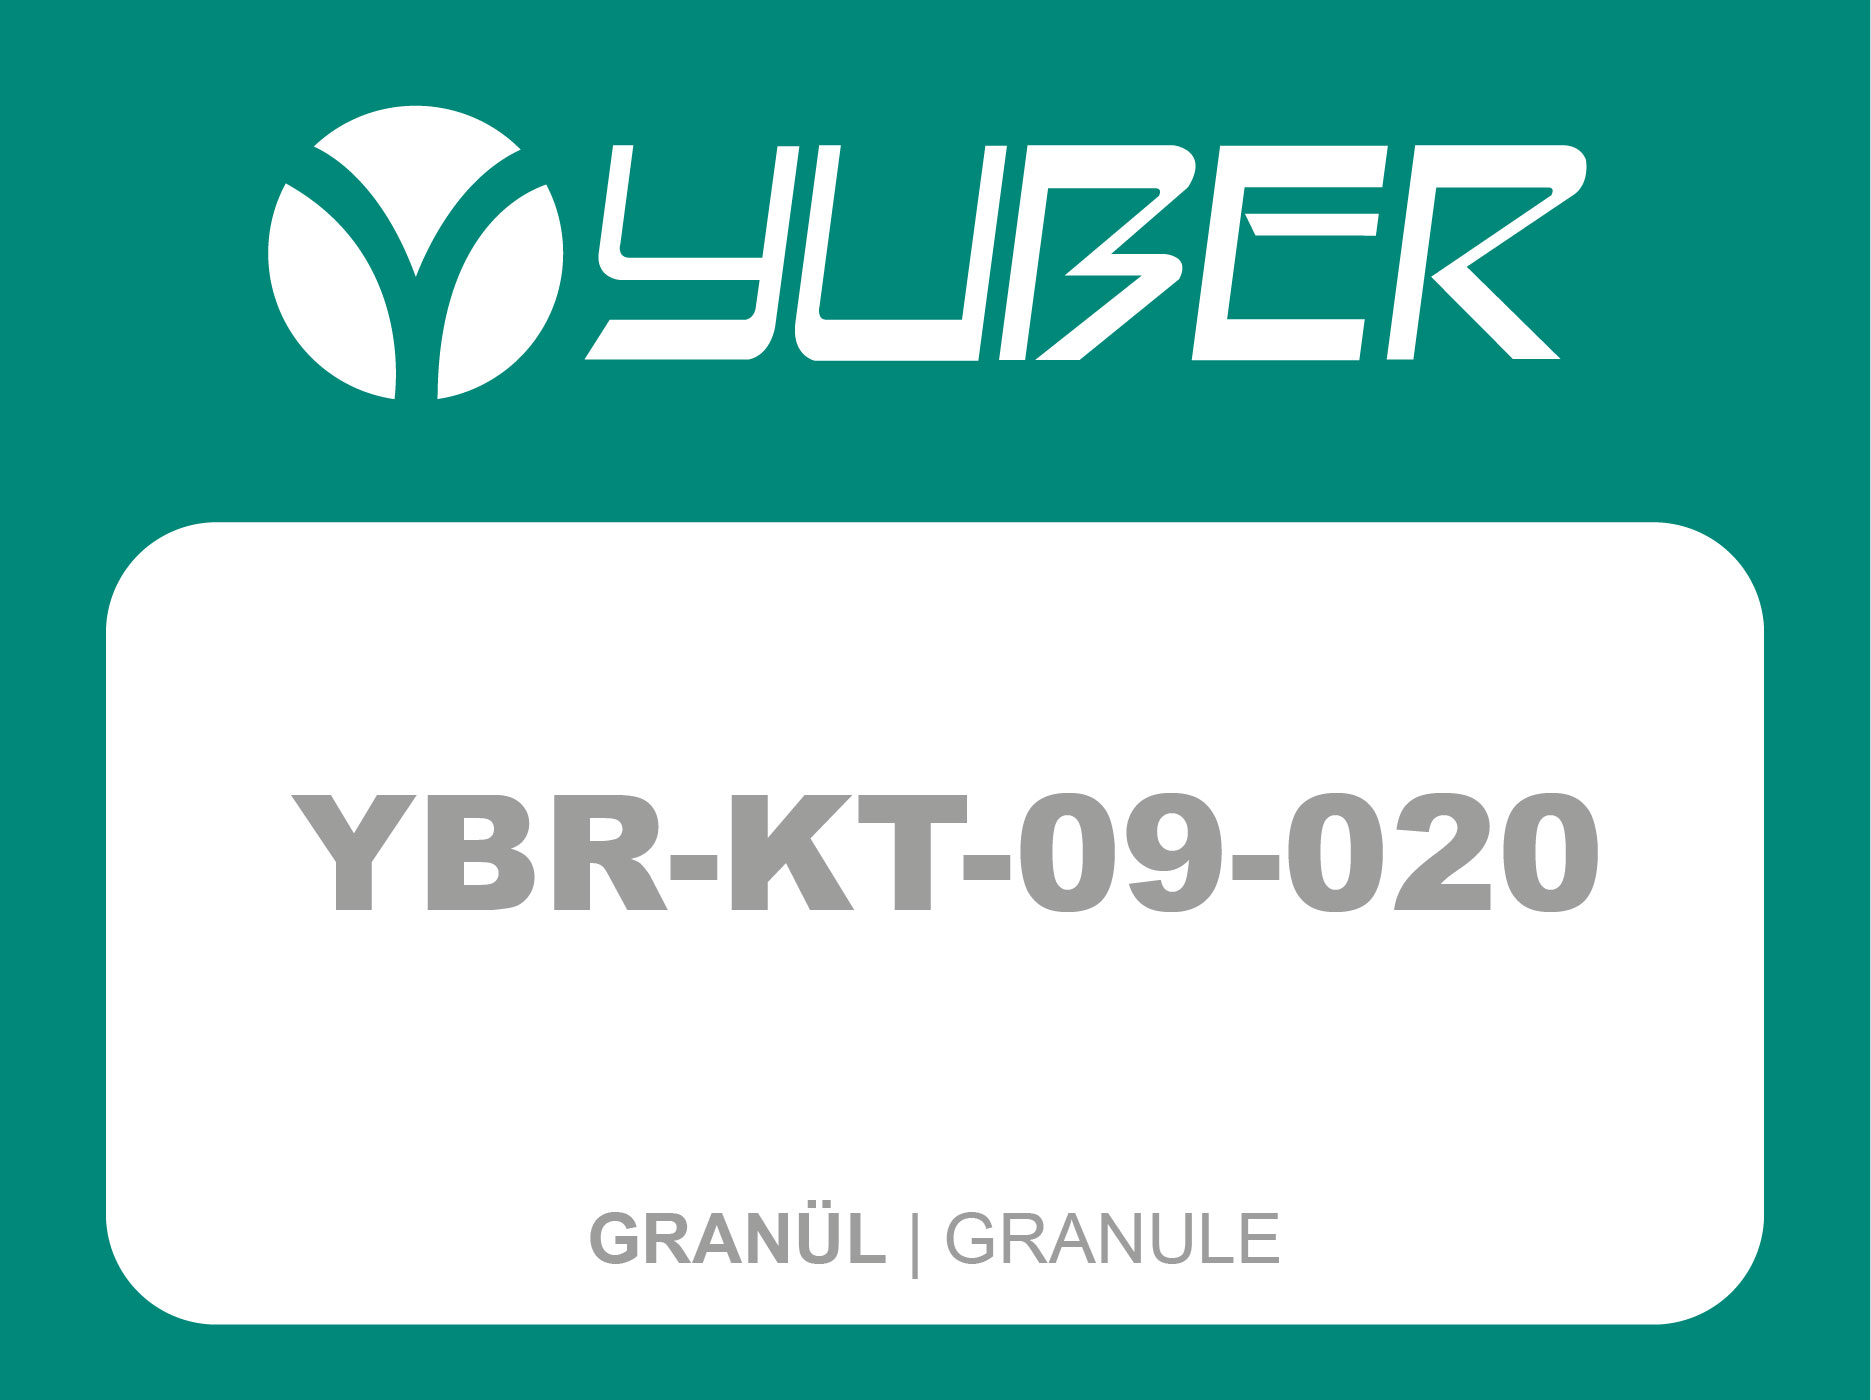 YBR KT 09 020 Granule Yuber Metallurgy